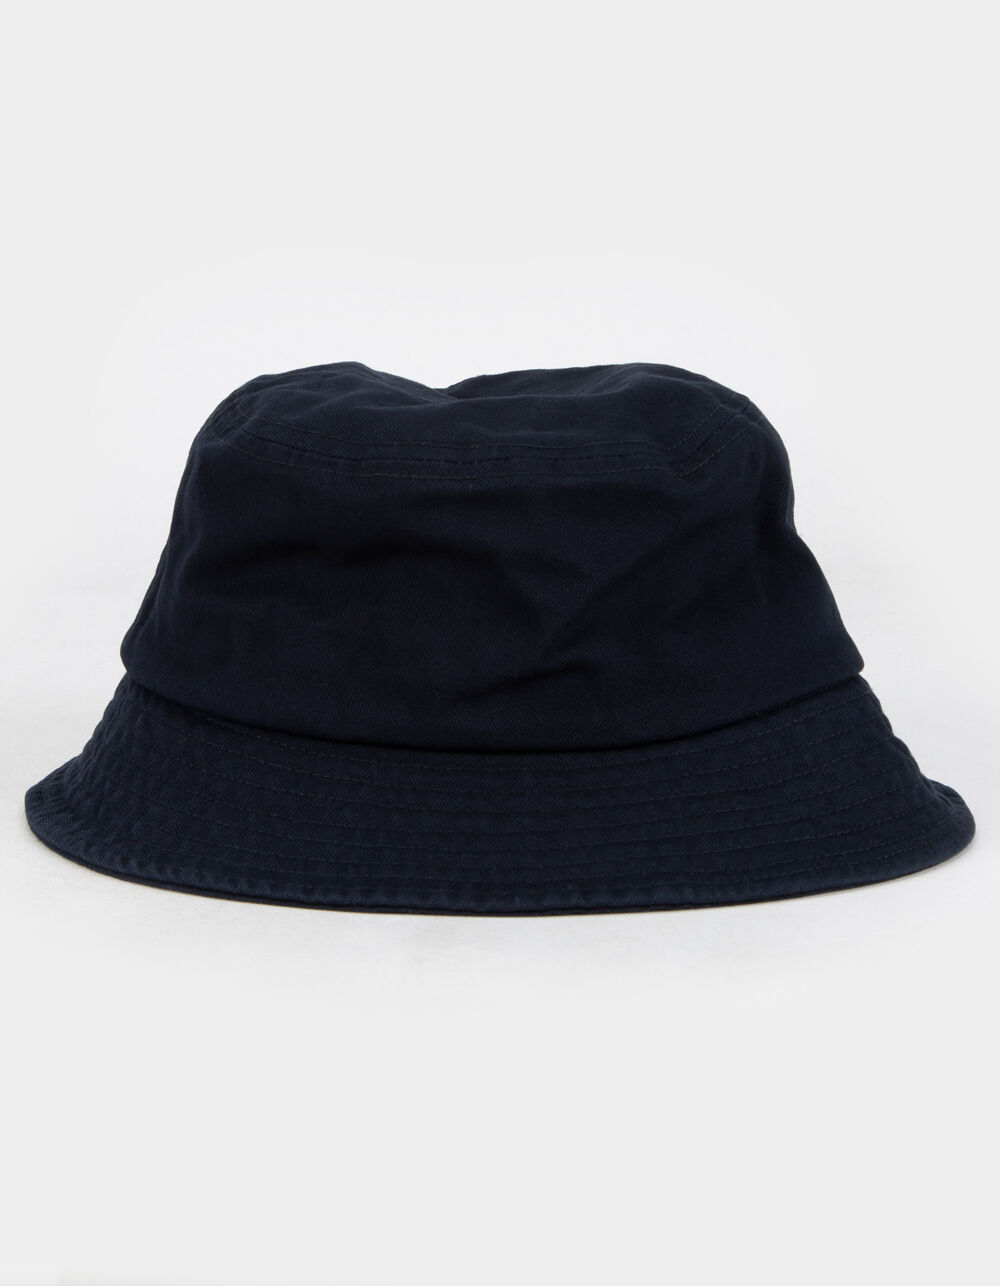 KANGOL Washed Navy Bucket Hat - NAVY | Tillys